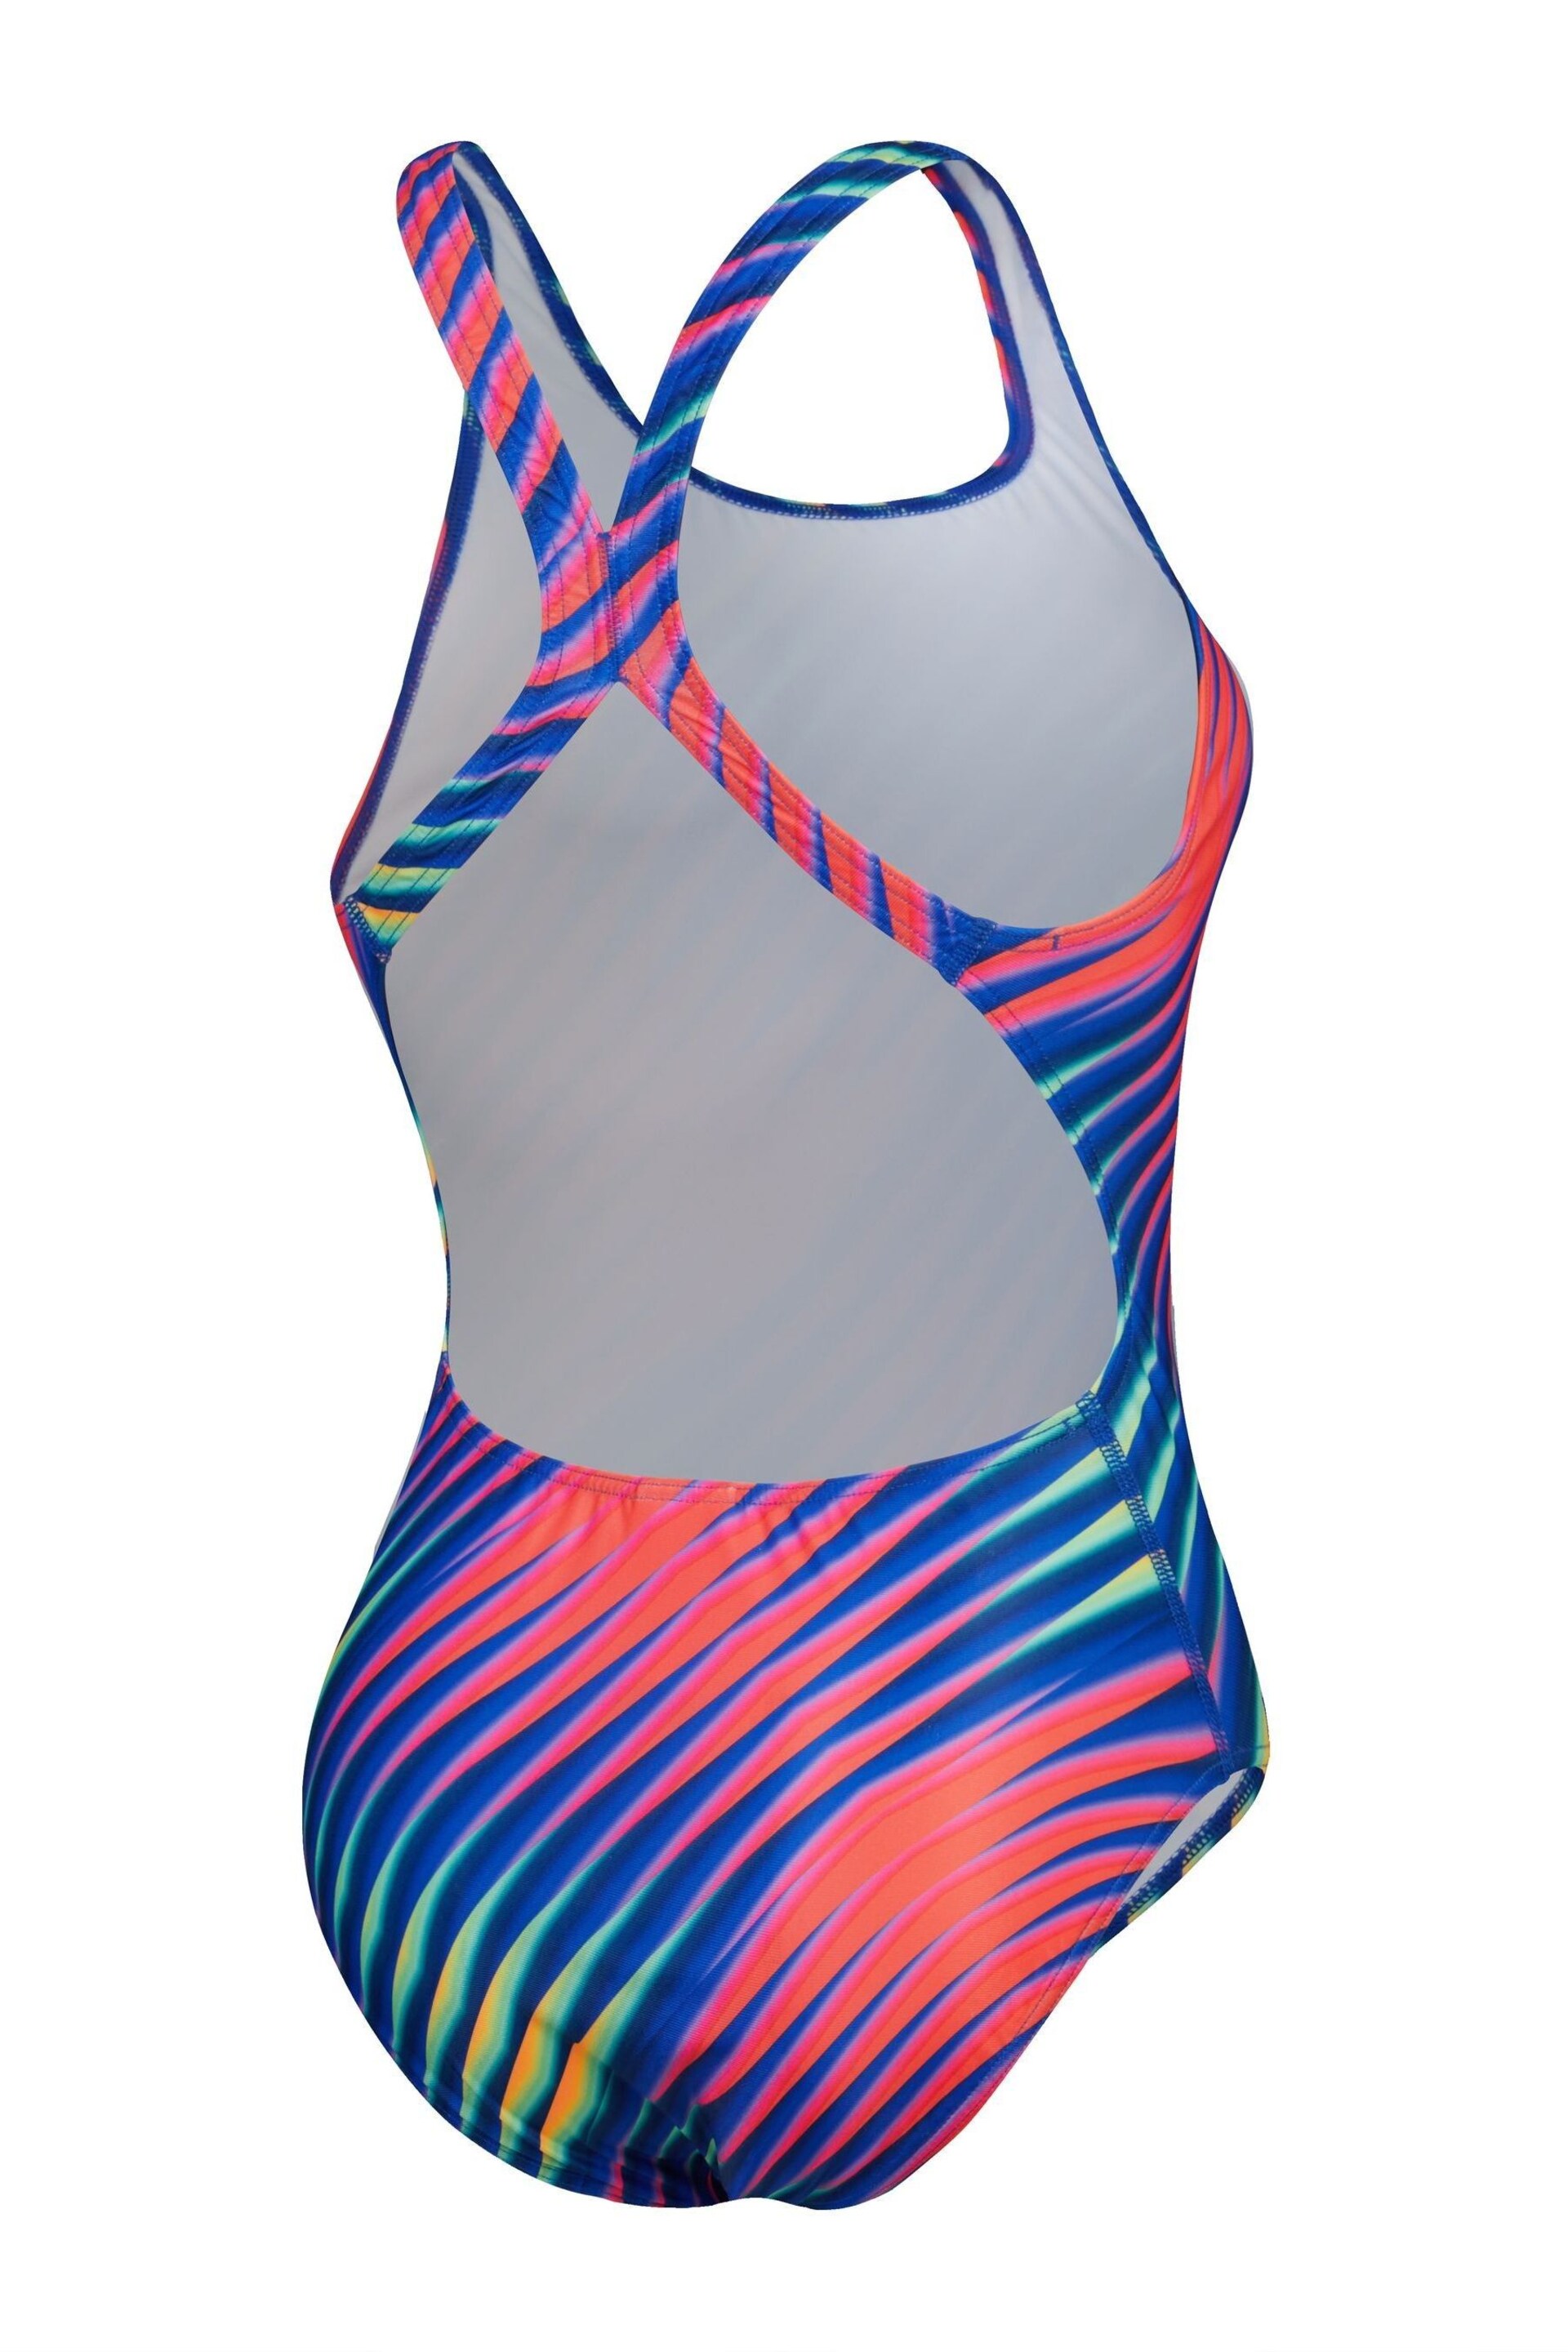 Speedo Womens Blue Allover Digital Powerback Swimsuit - Image 9 of 12